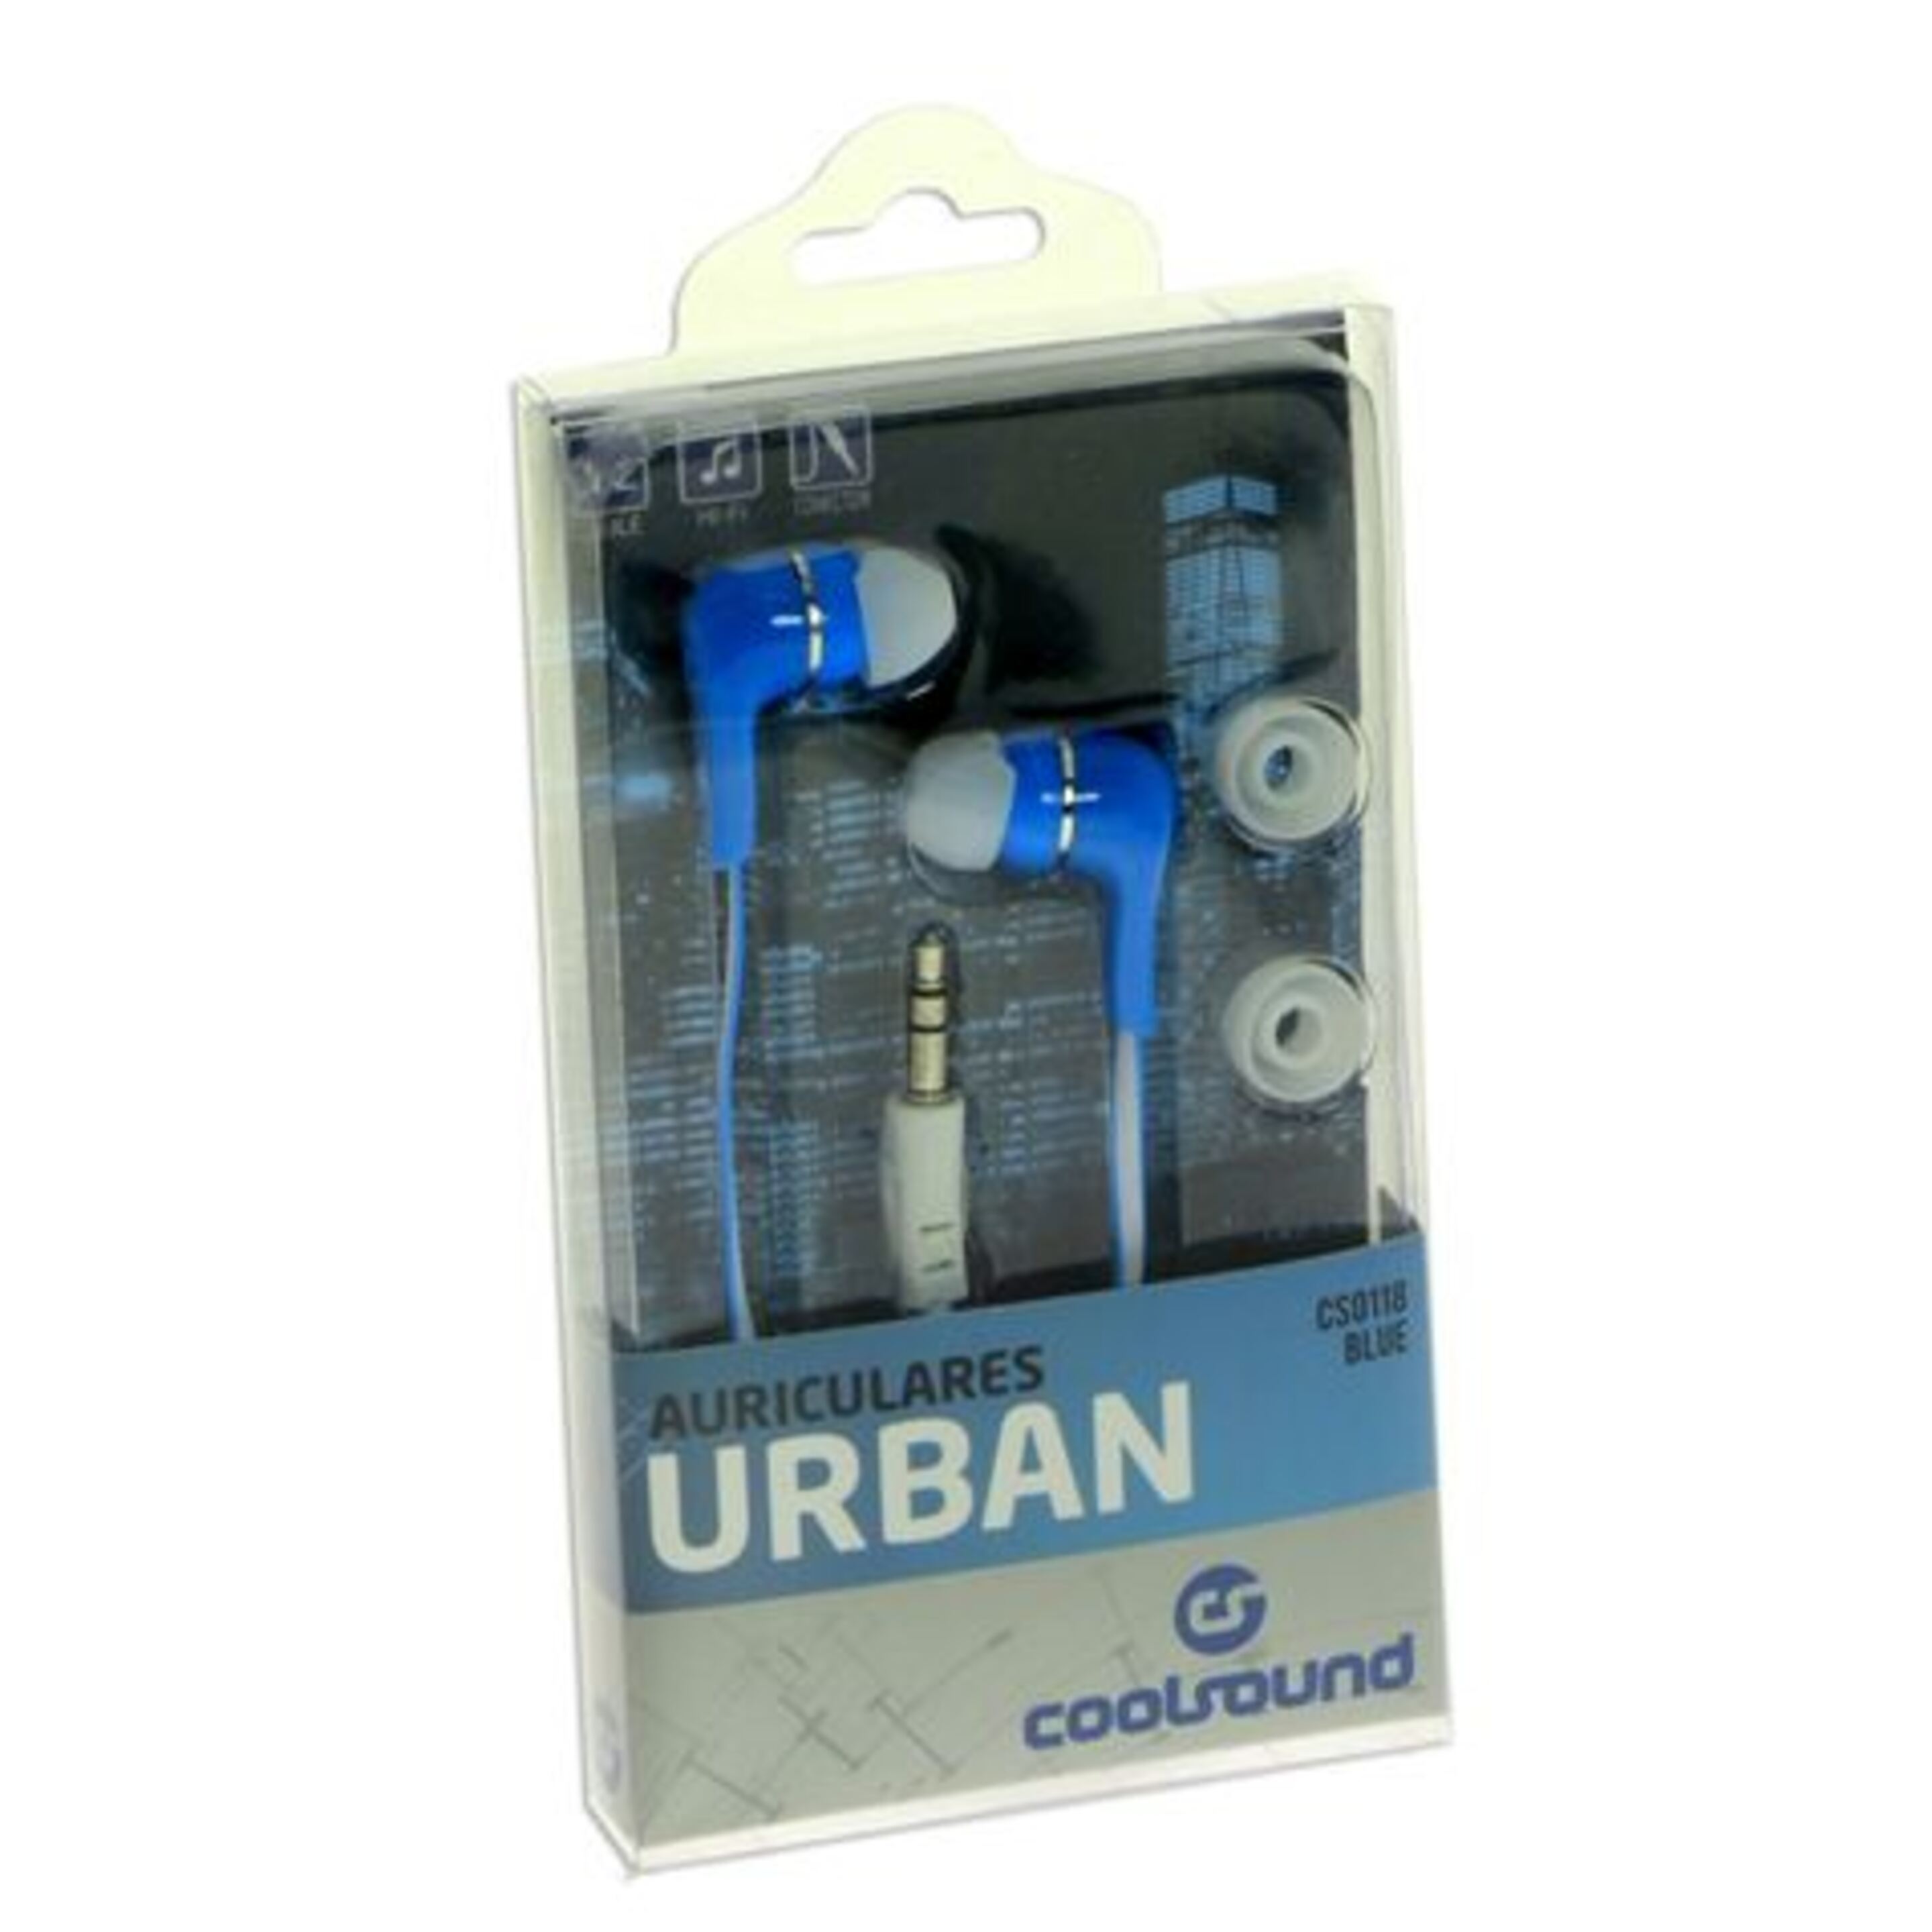 Auriculares Urban In-ear Azul Coolsound - Azul  MKP